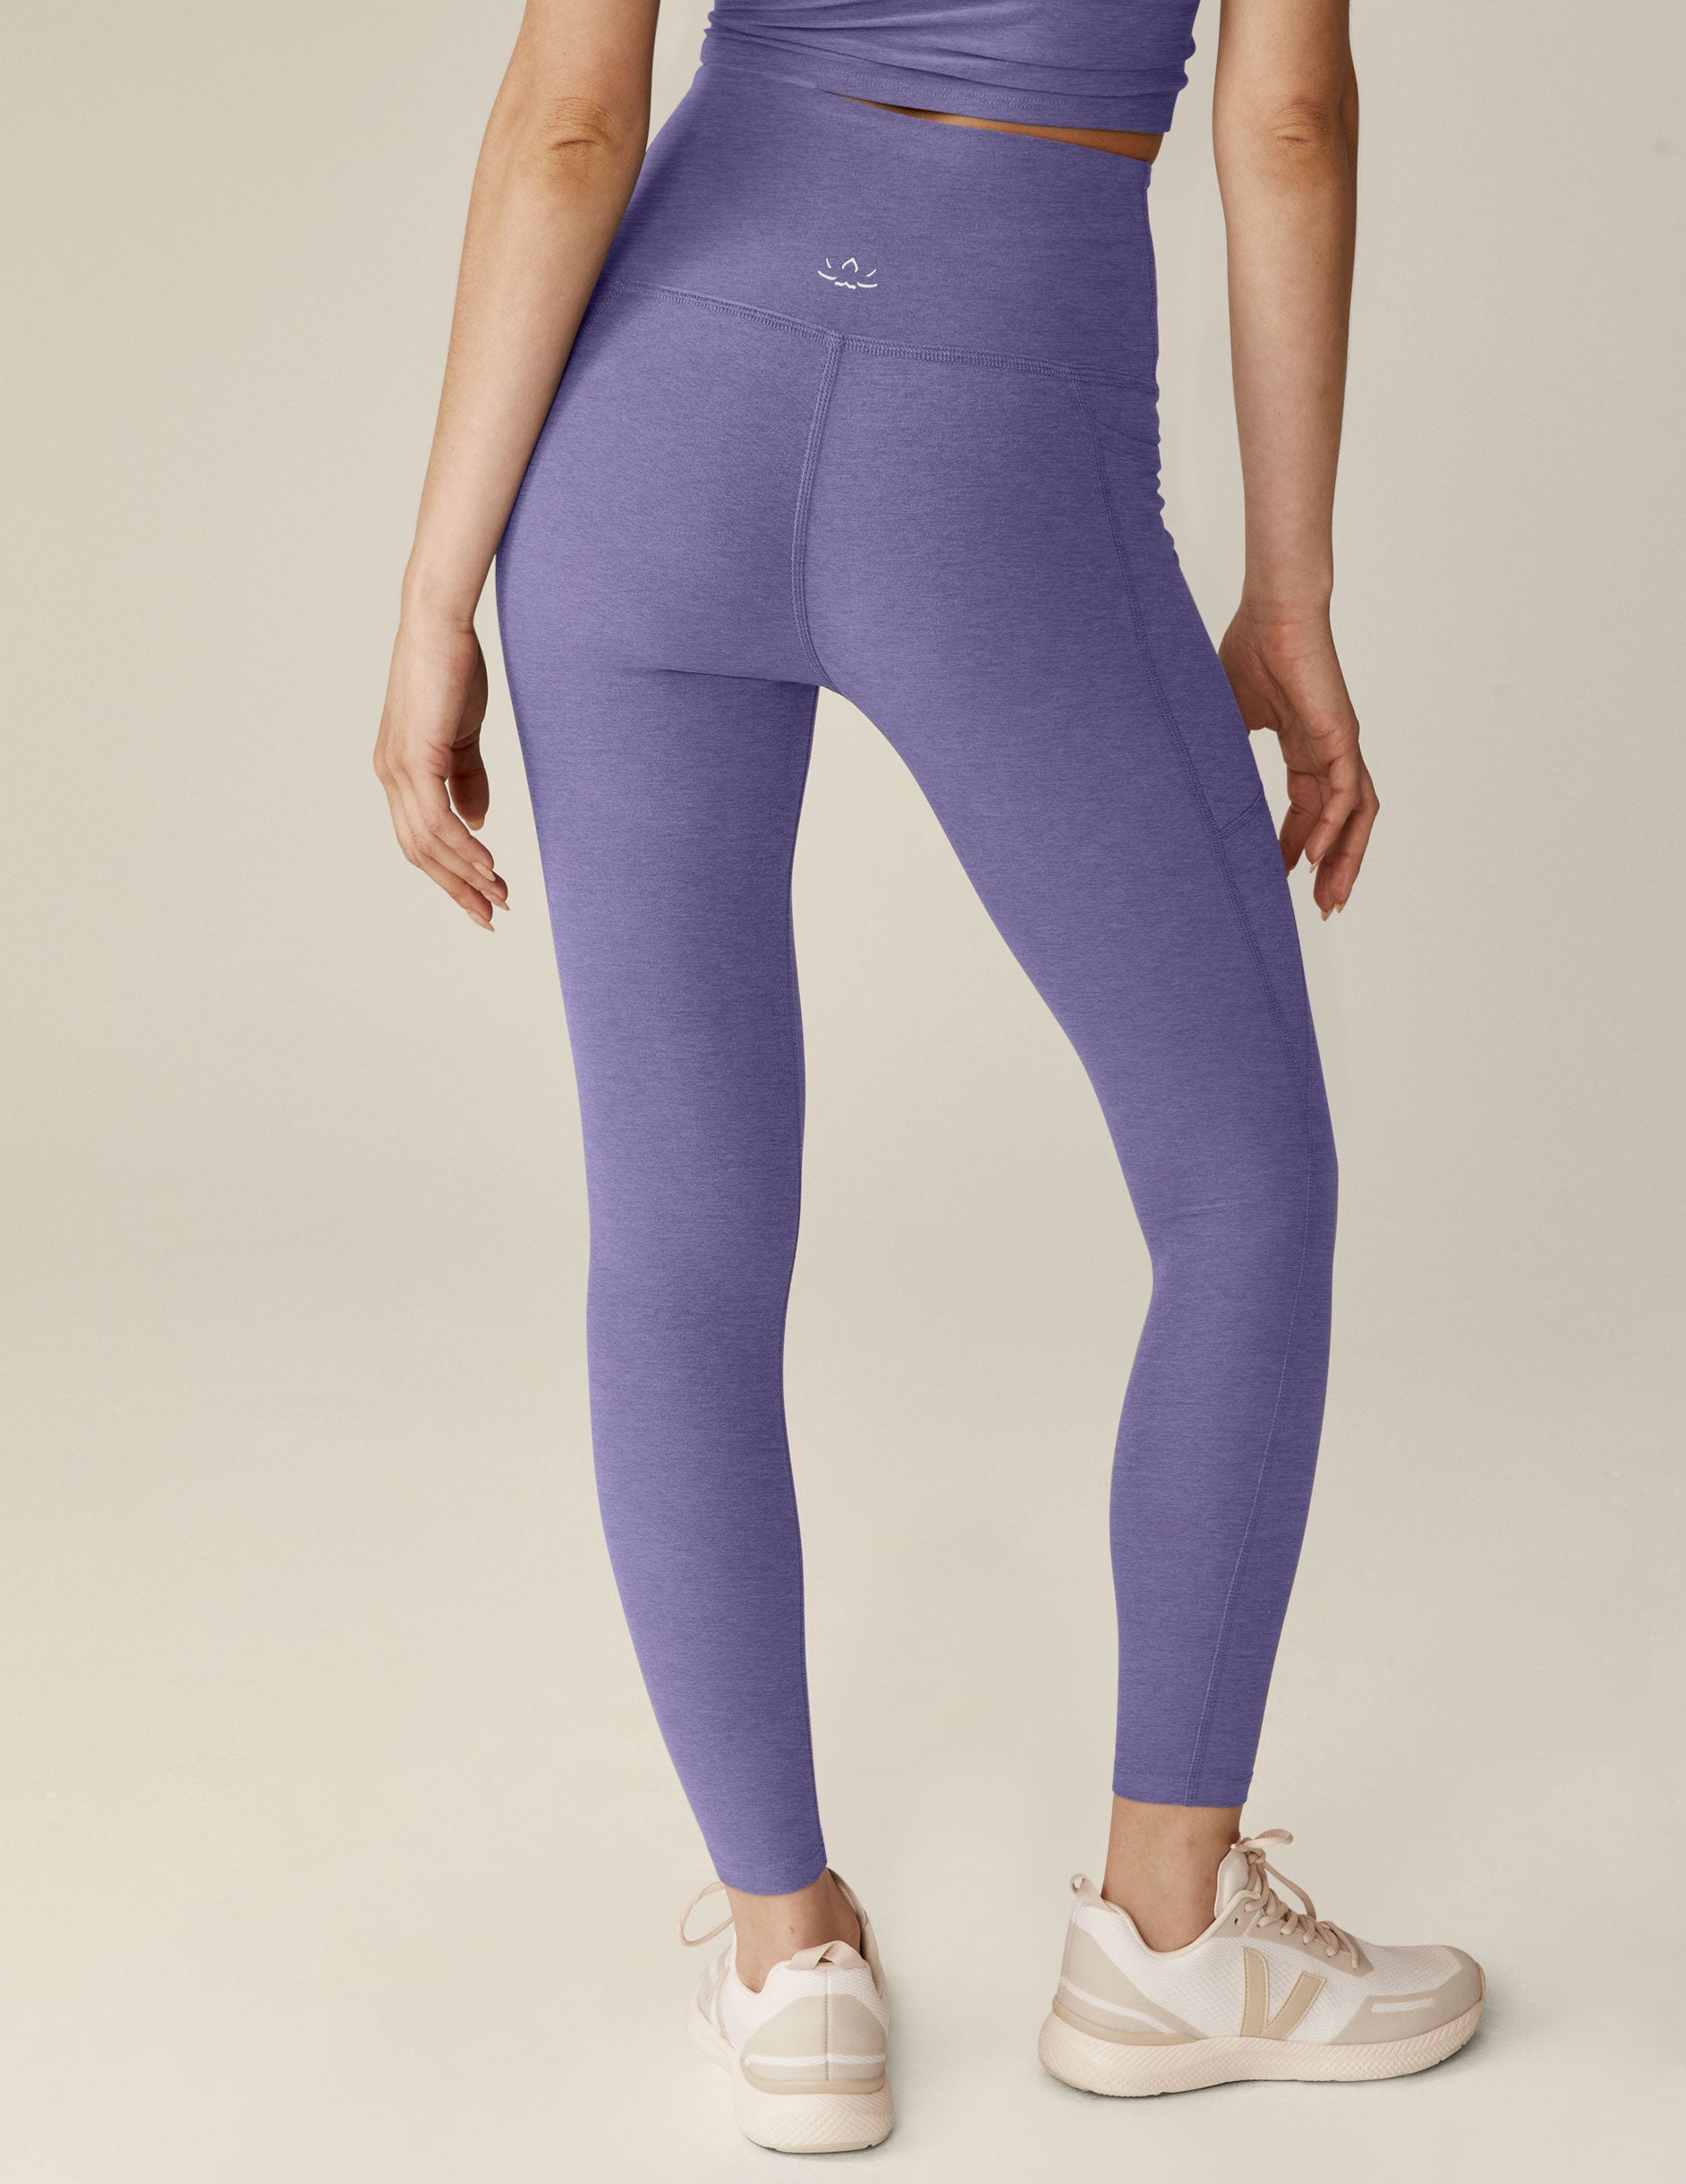 purple high-waisted midi spacedye leggings with pockets. 